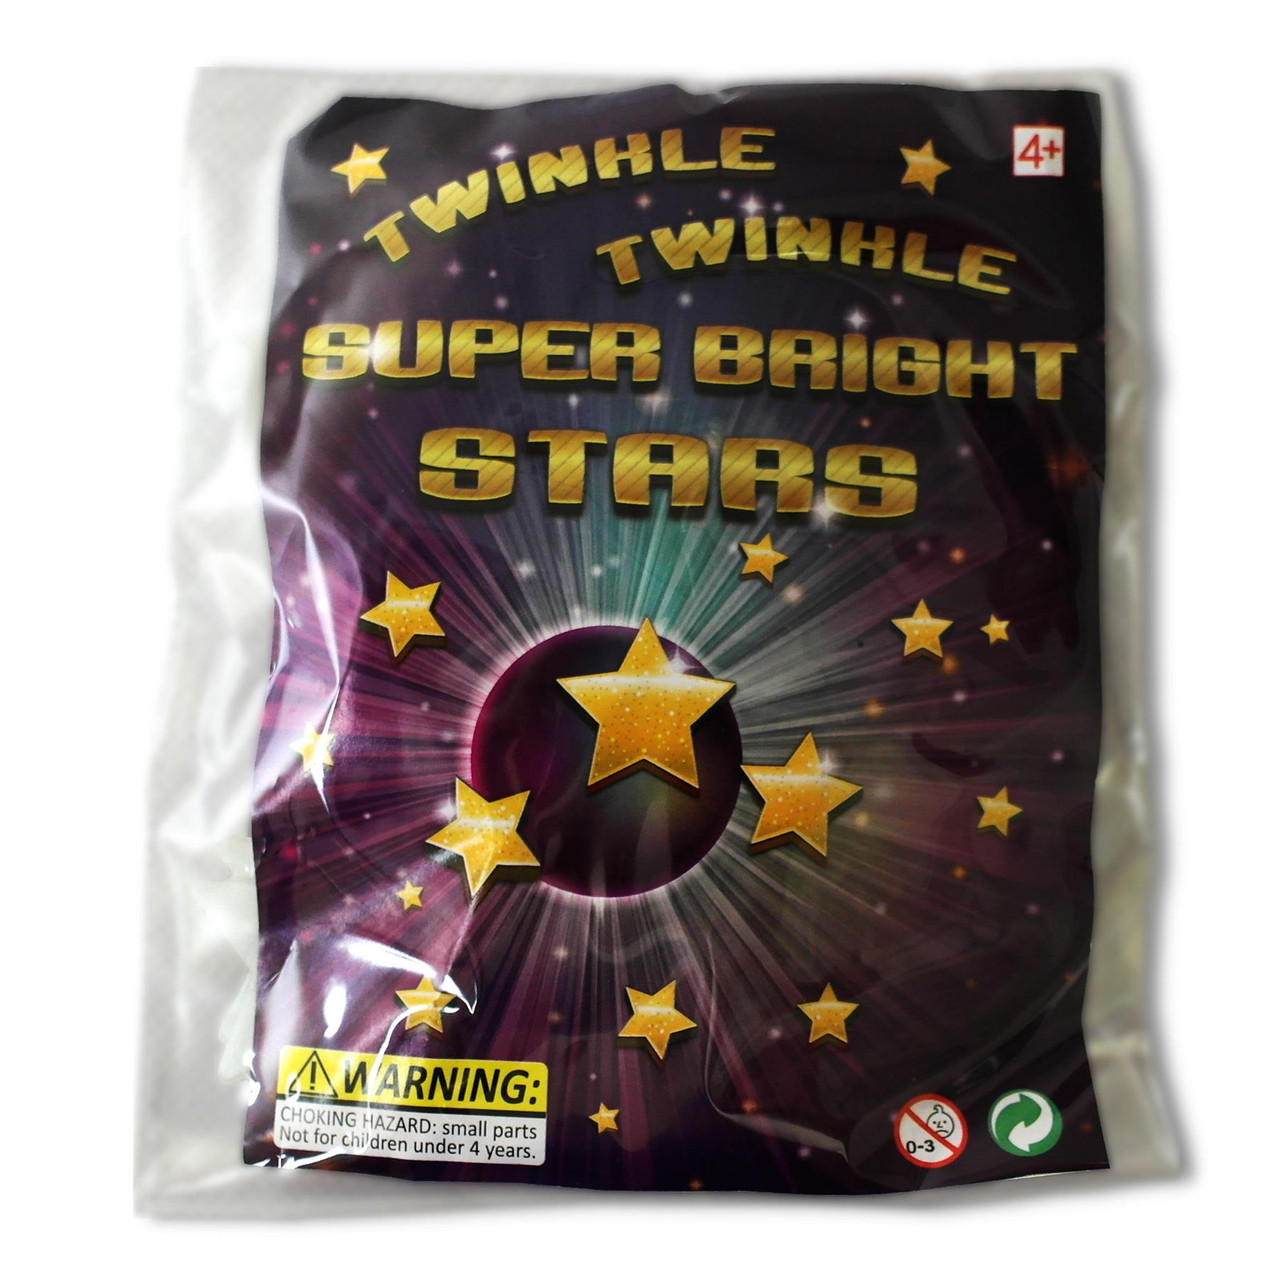 The Original Glow Stars Glow Superstars Stickers 500+ Pieces